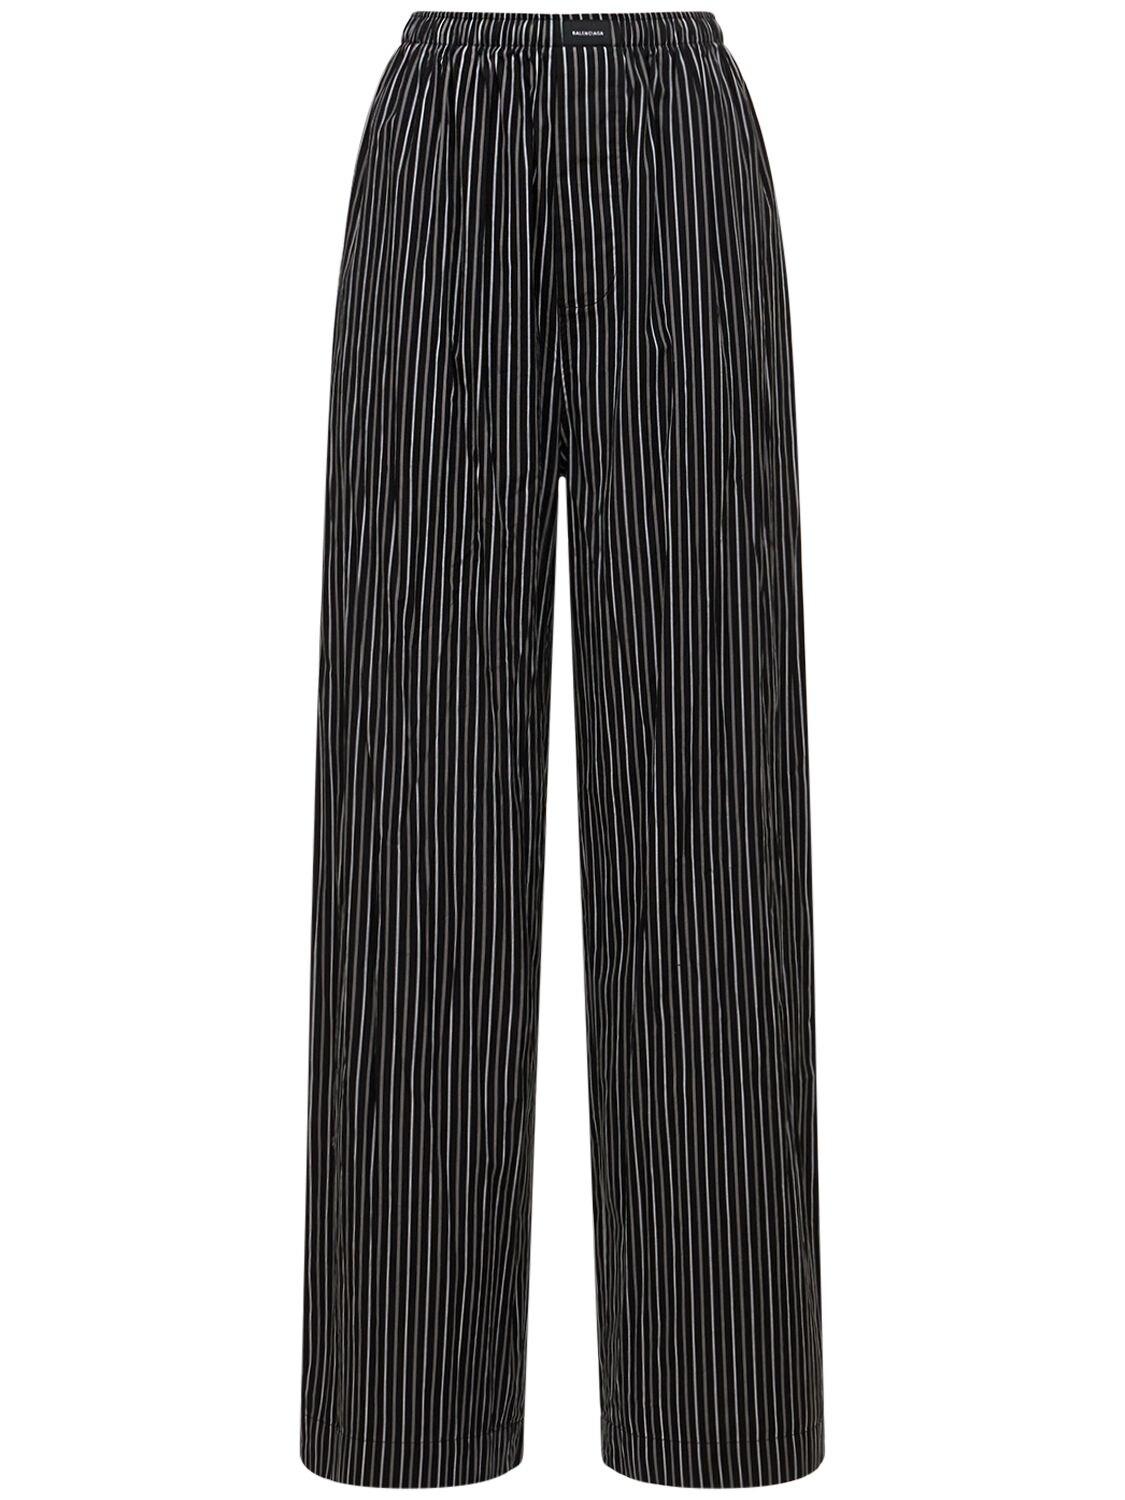 Balenciaga Pajama Striped Poplin Pants in Black/Grey (Black) | Lyst